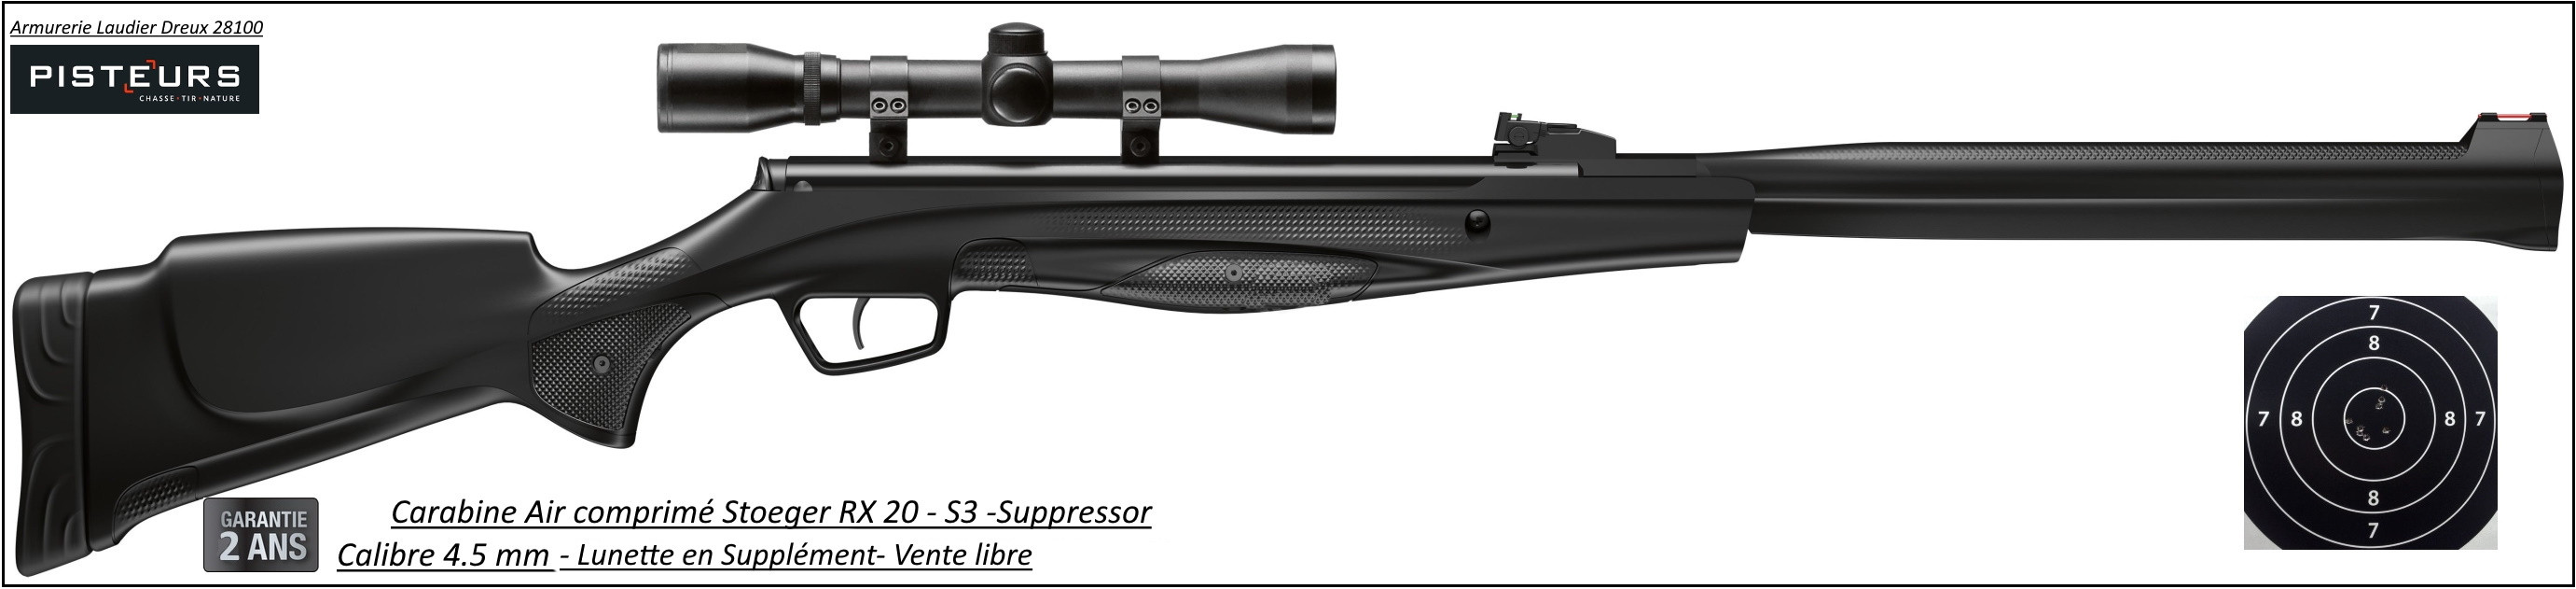 Carabine Stoeger  RX 20 S3 Suppressor Air comprimé Calibre 4.5mm 19,90 joules  -Promotion-Ref 39463 